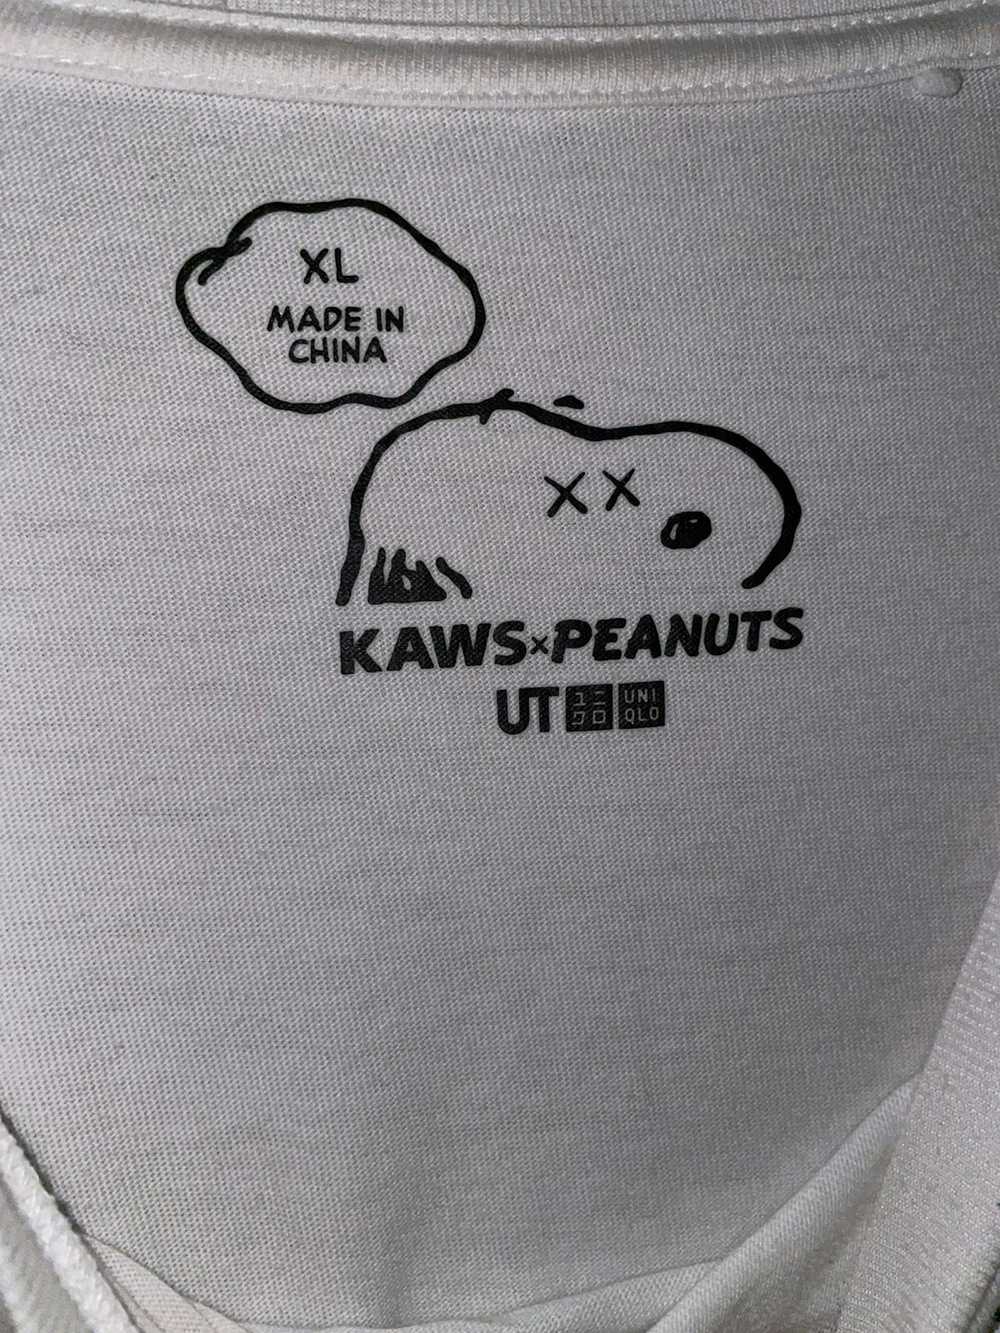 Kaws Kaws X Peanuts “Snoopy Joe Cool” Tee - image 3